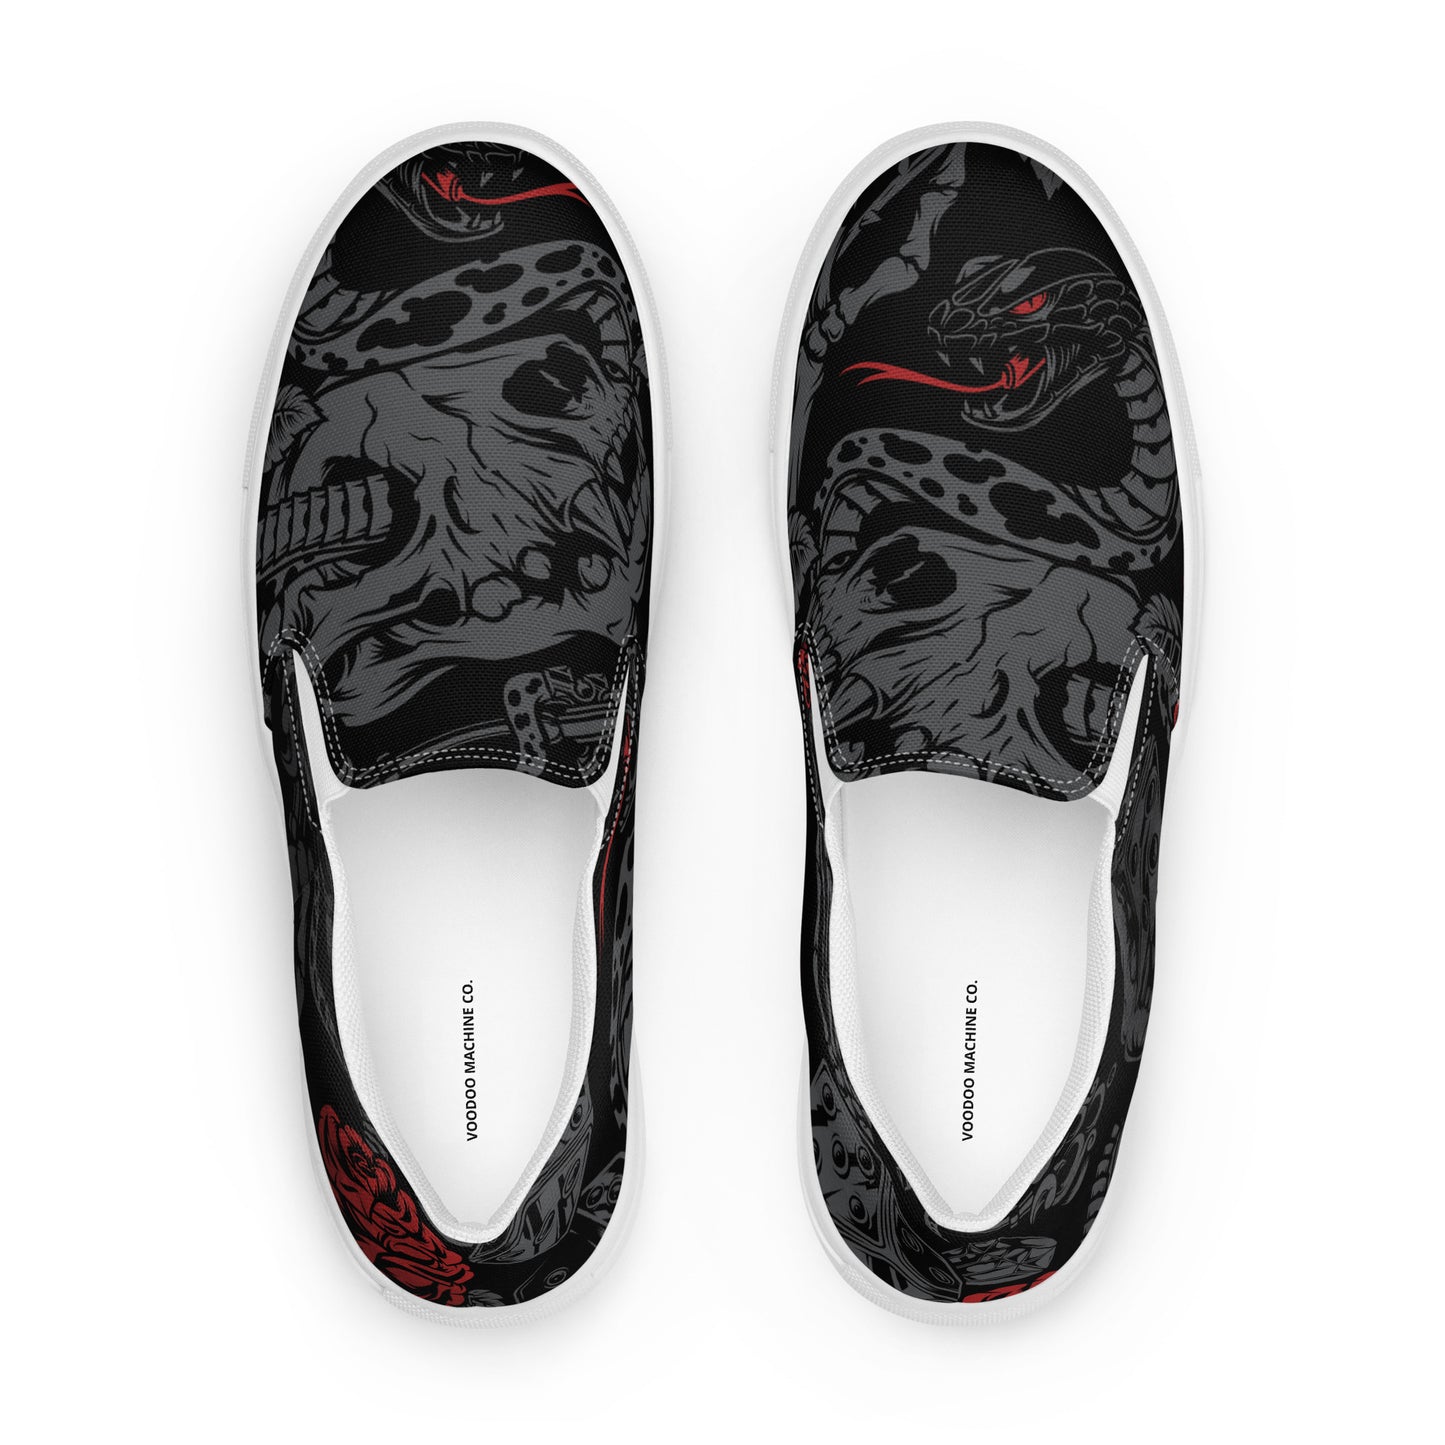 VOODOO MACHINE CO. Men’s slip-on canvas shoes